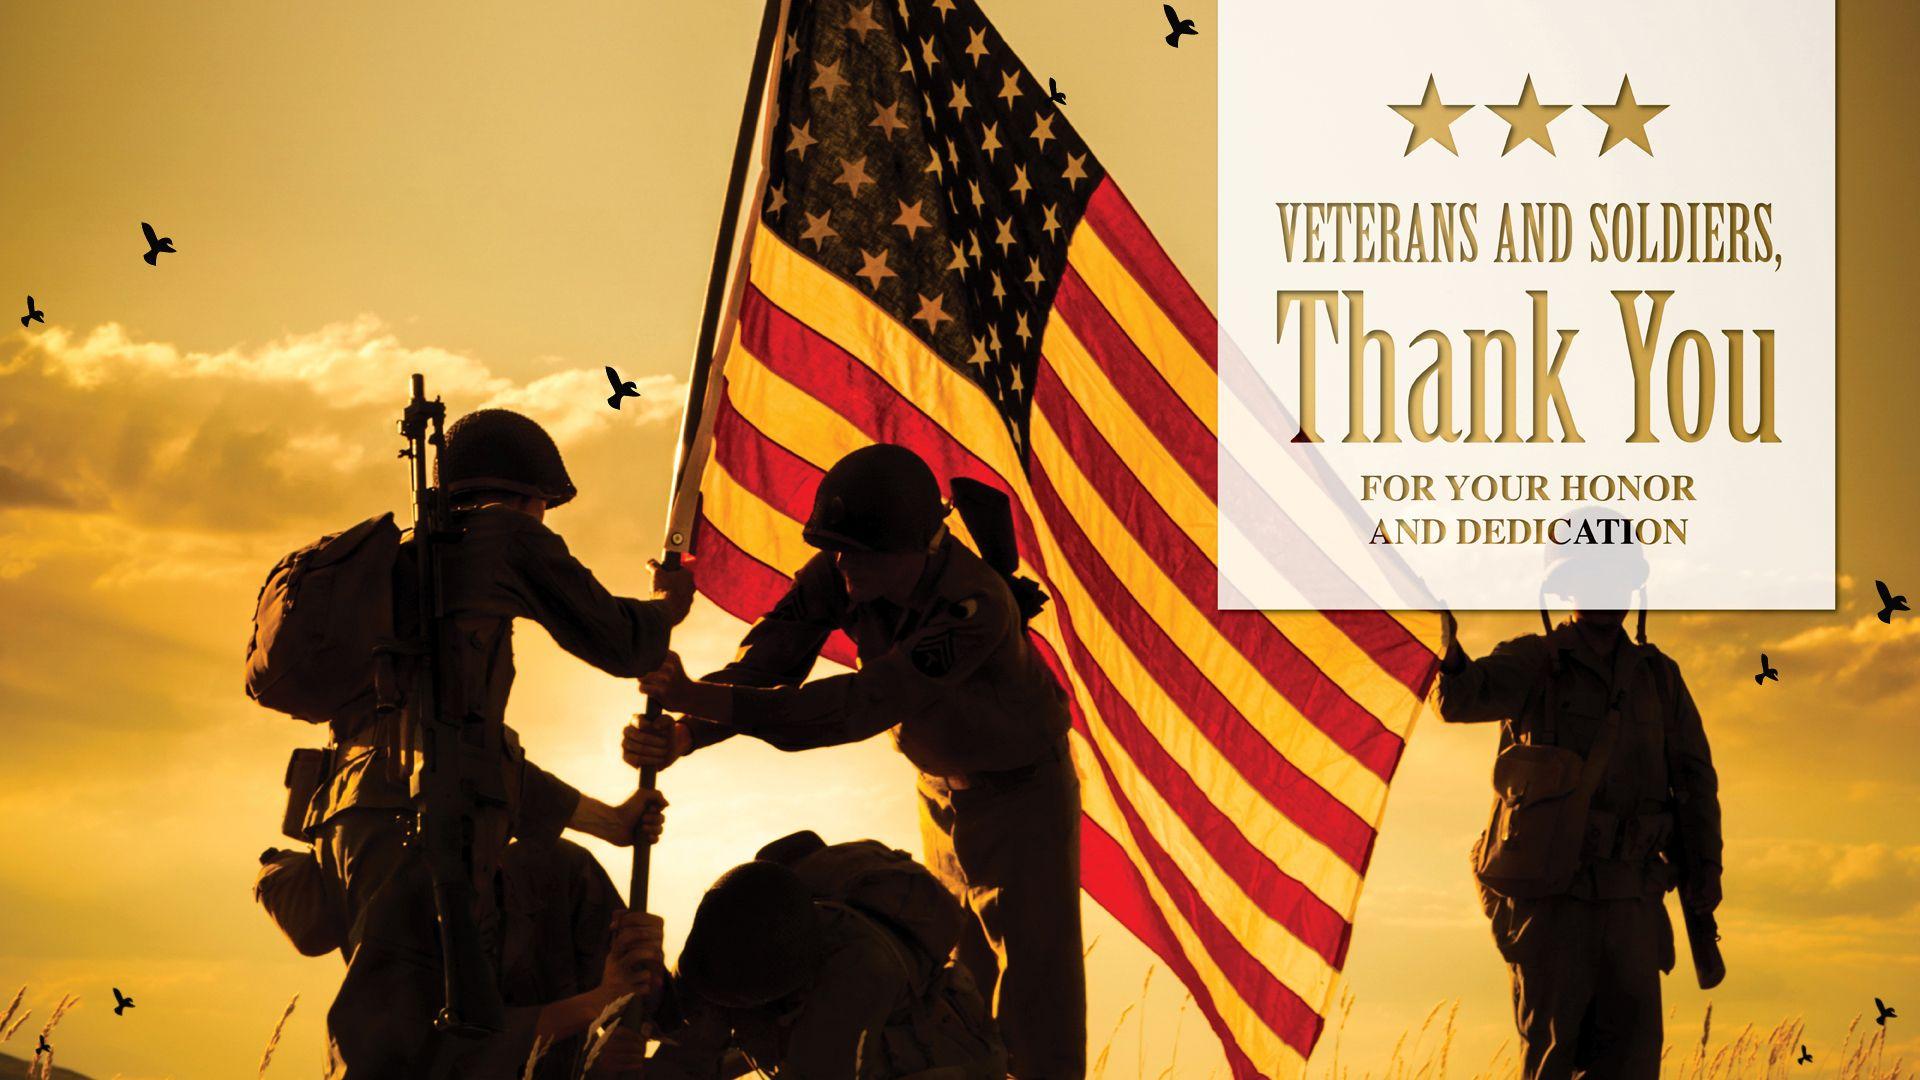 Thank You Veterans Image & Wallpaper 2017